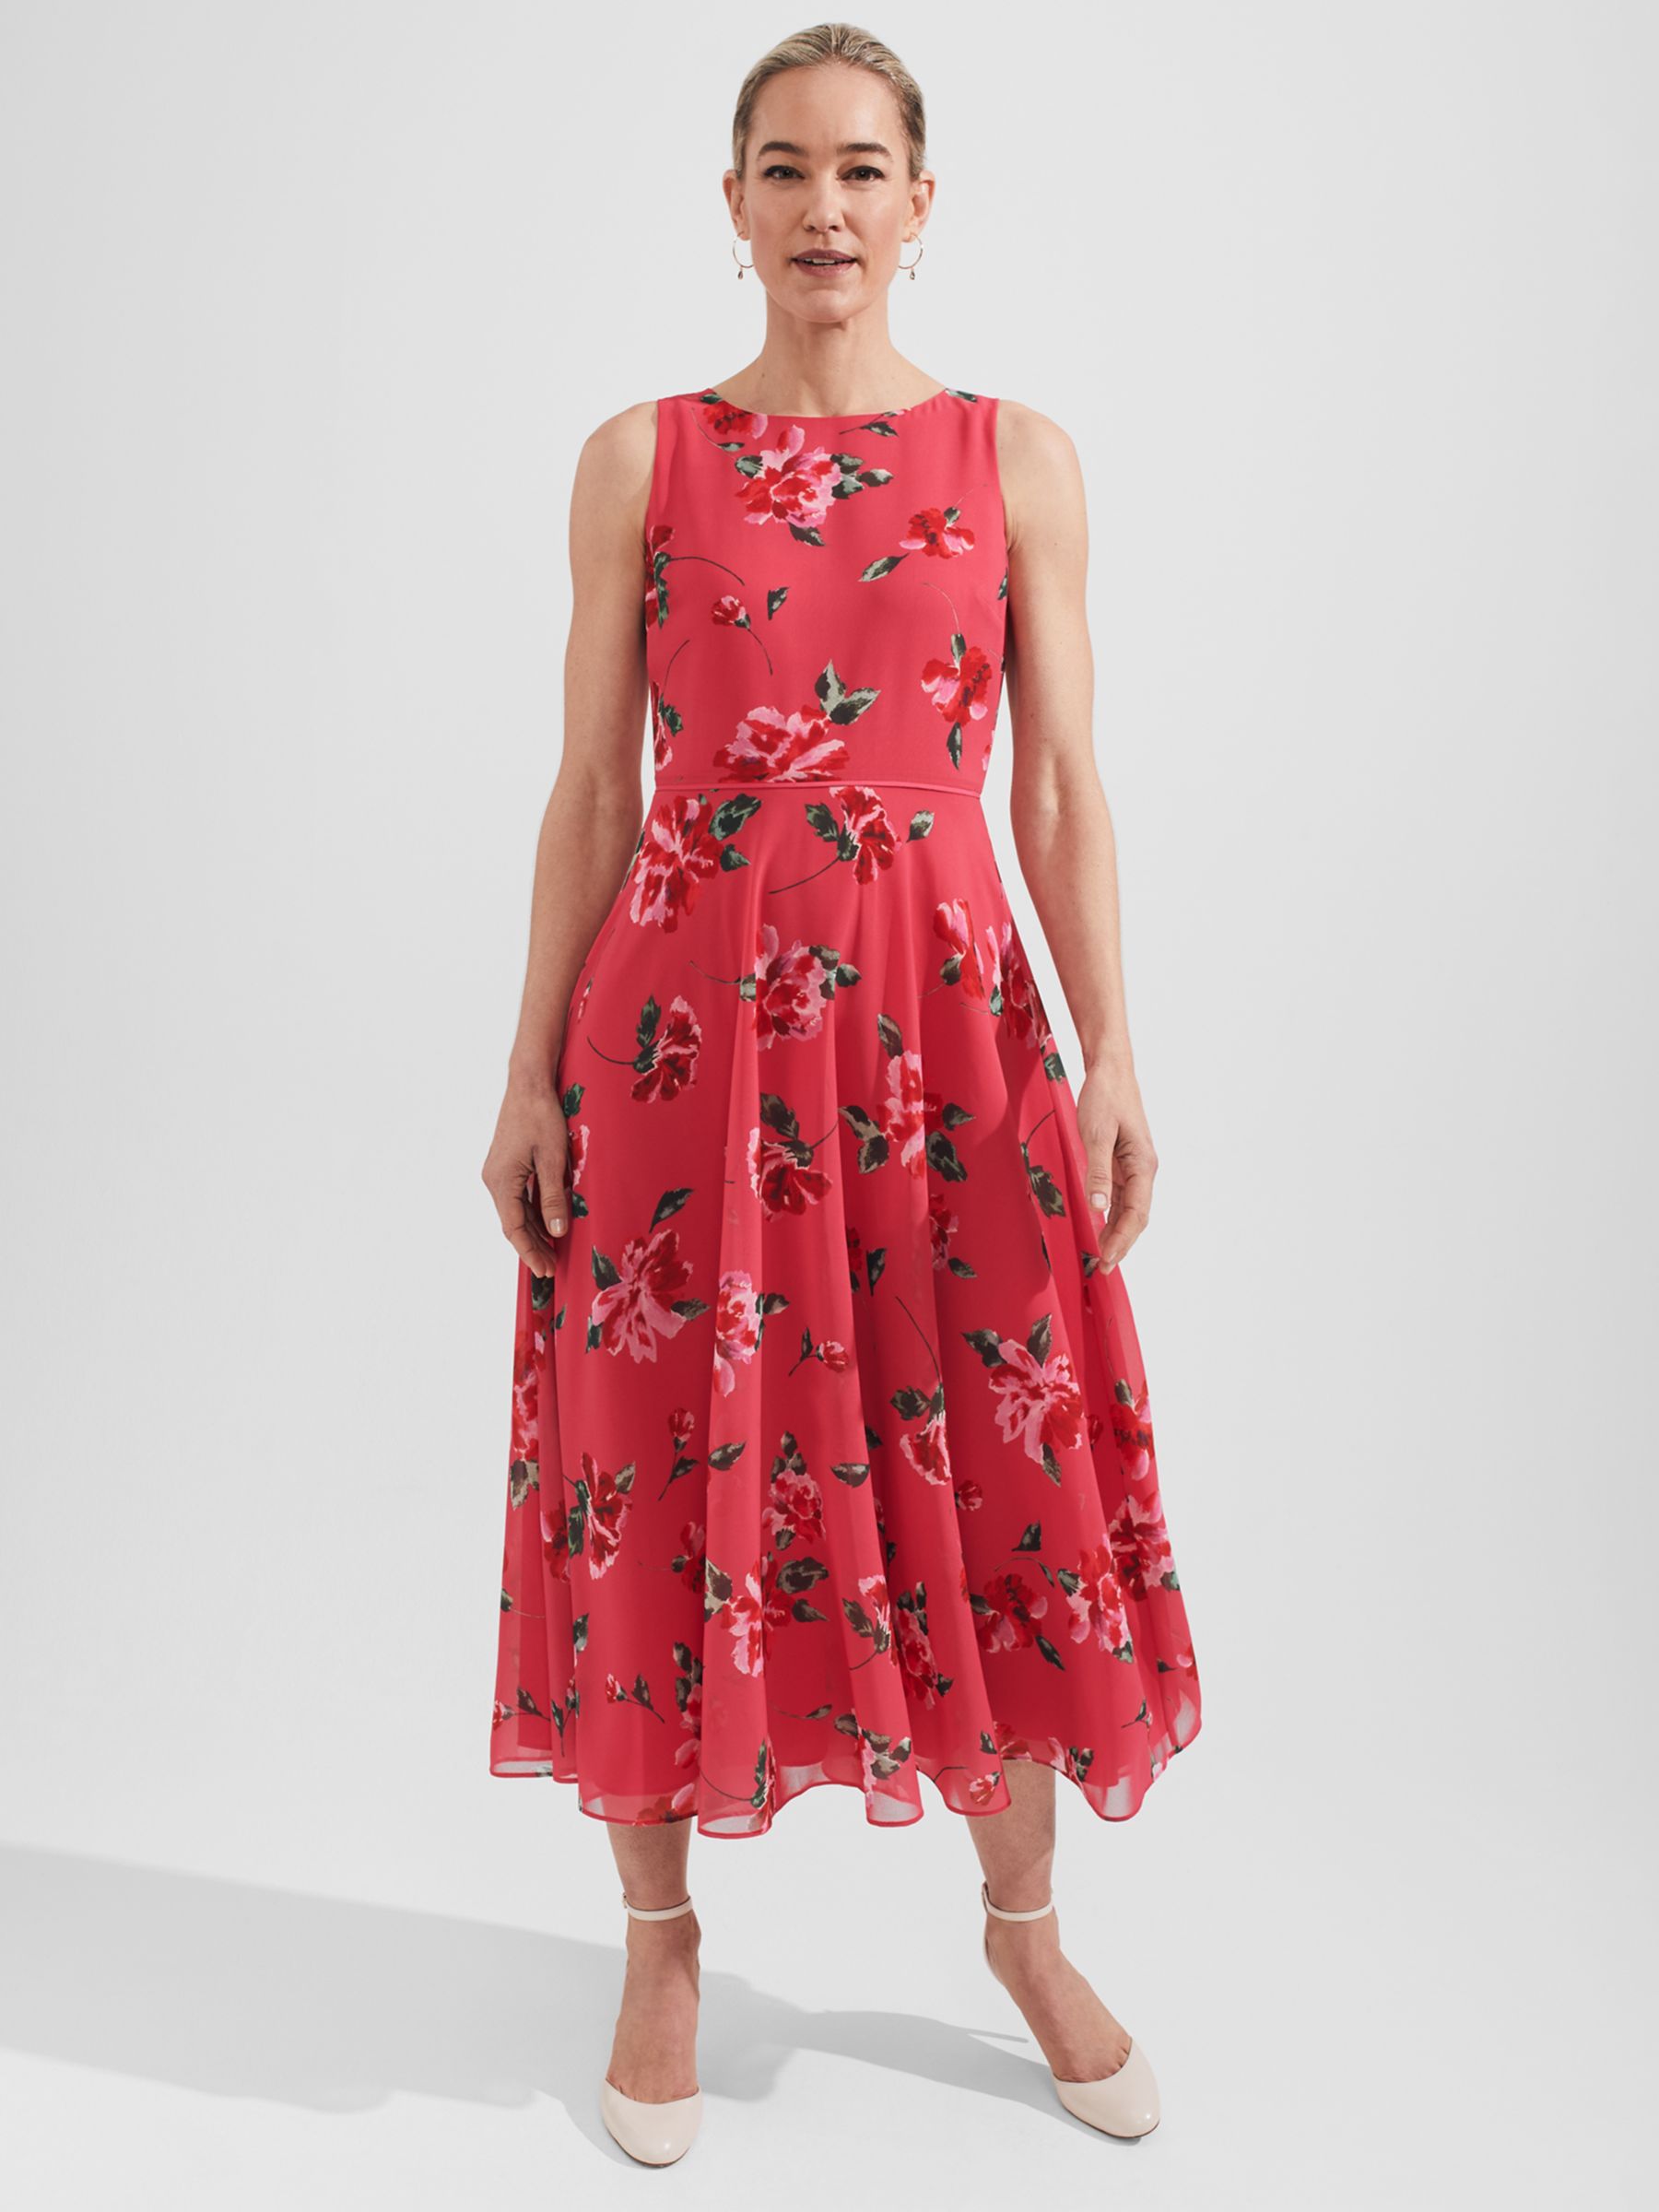 Hobbs Carly Floral Print Midi Dress, Red/Multi at John Lewis & Partners